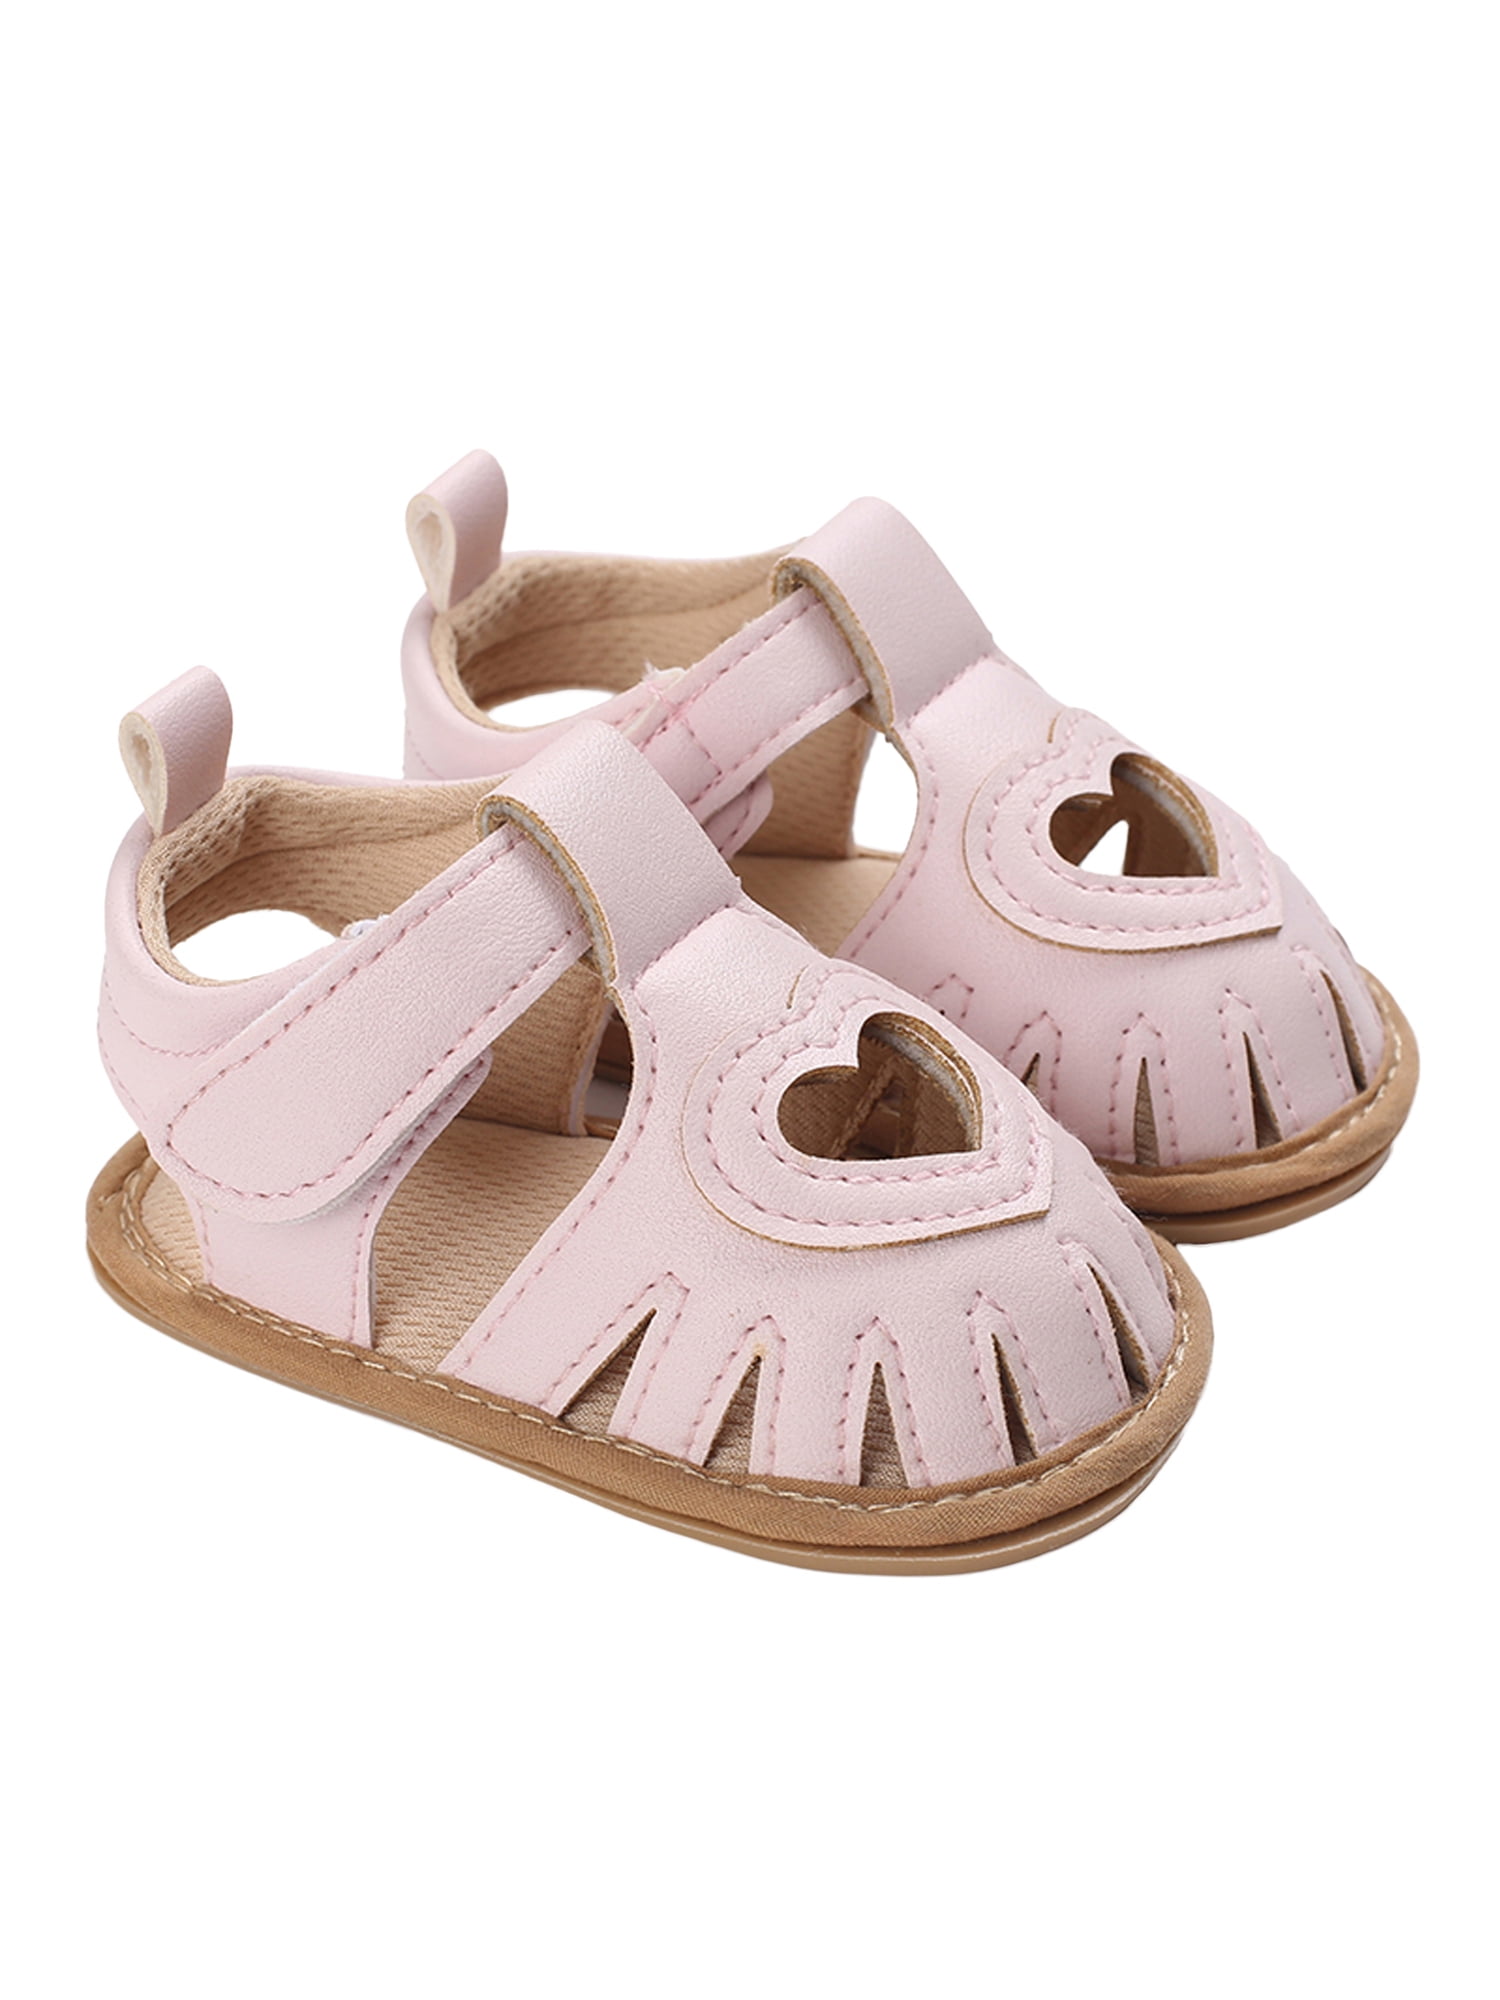 Toddler Baby Princess Girls Crib Shoes Knit Hollow Soft Sole Prewalker Sandals 